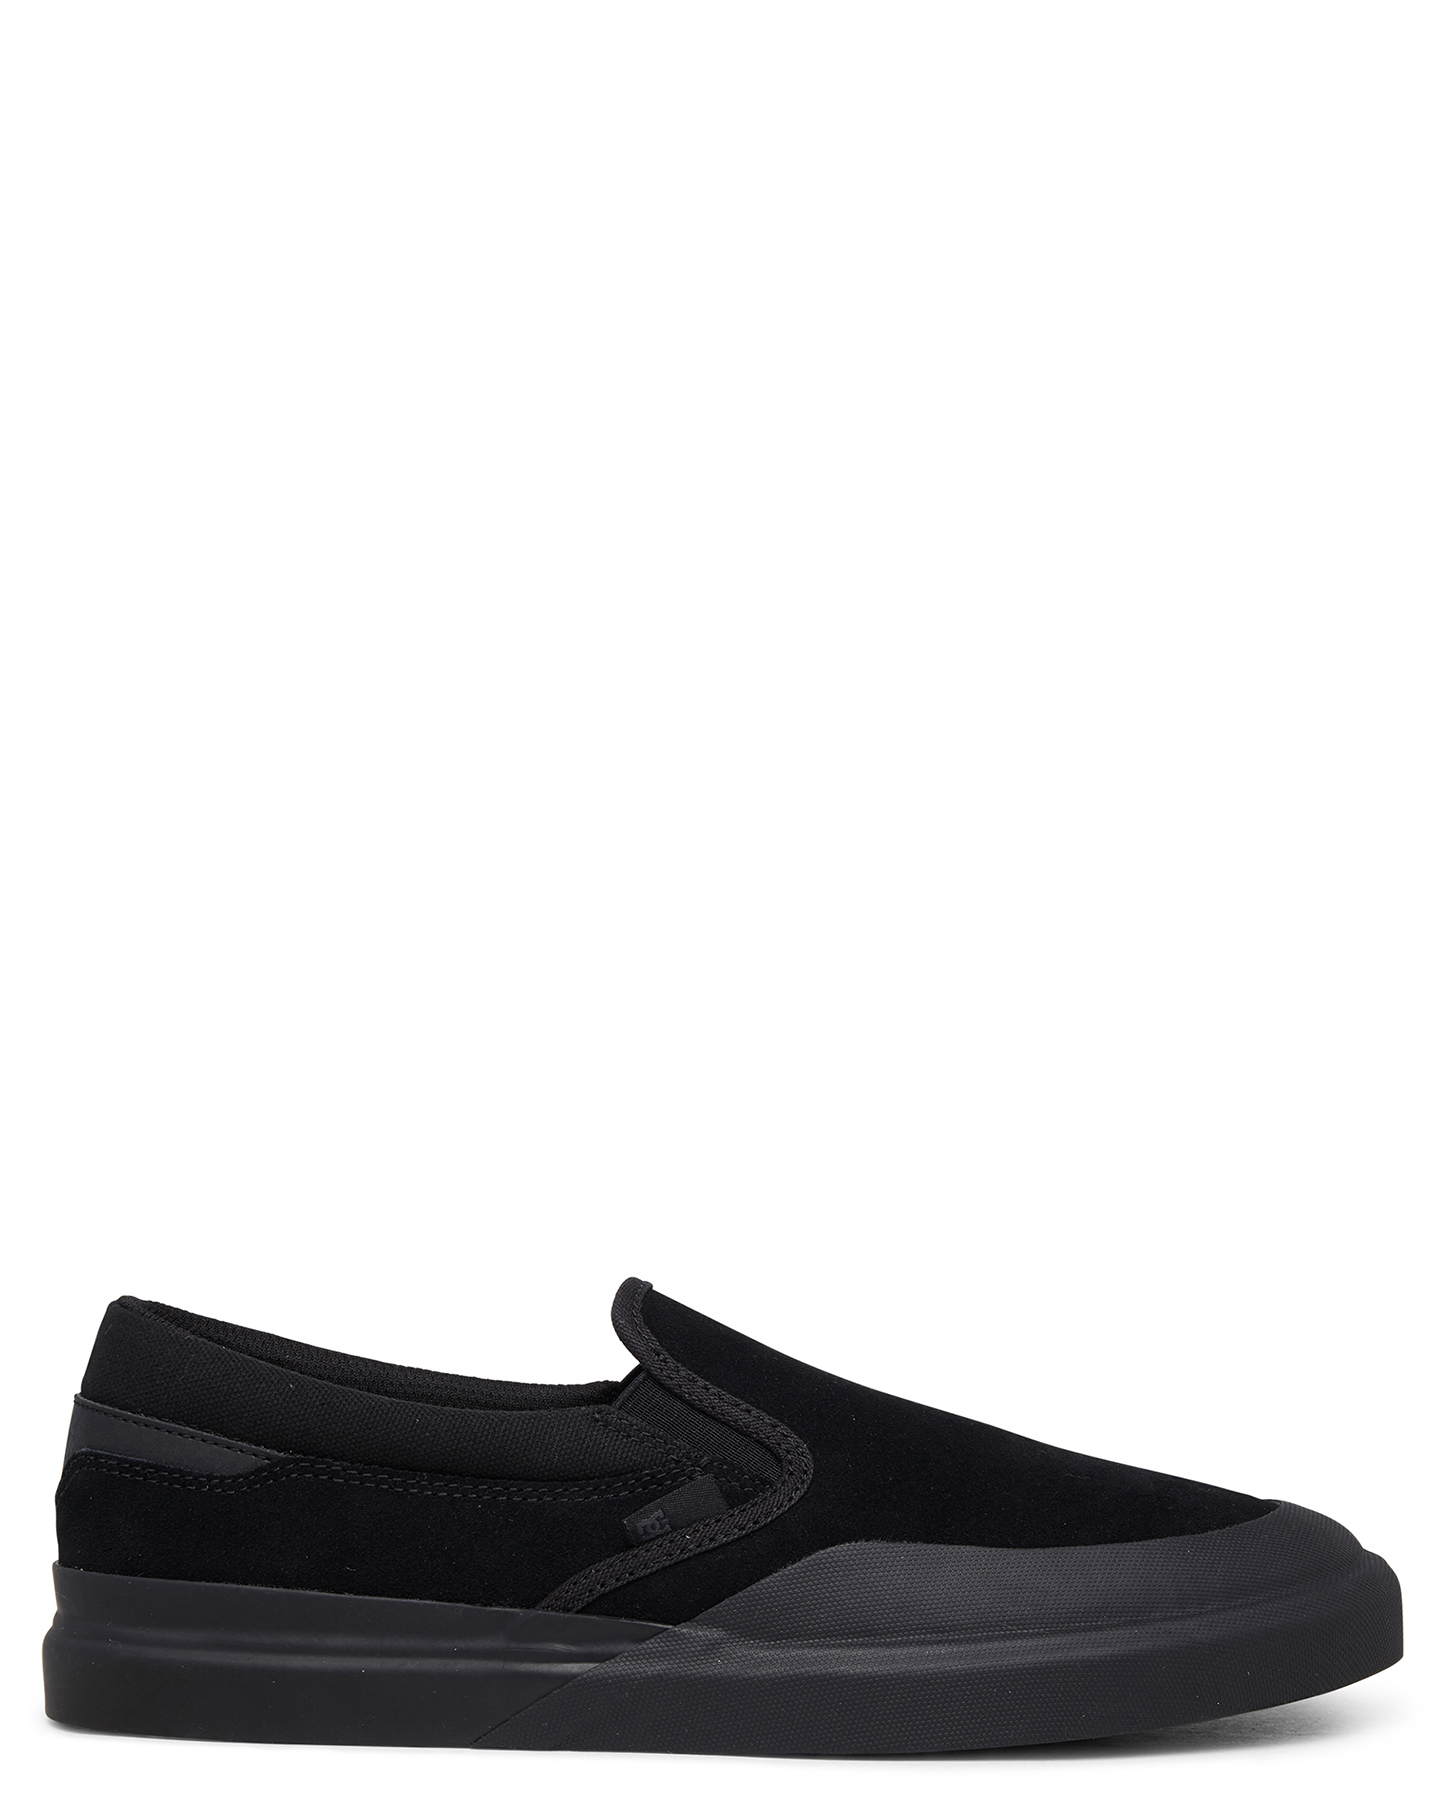 Dc Shoes Mens Infinite Slip On Shoe - Black Black Black | SurfStitch